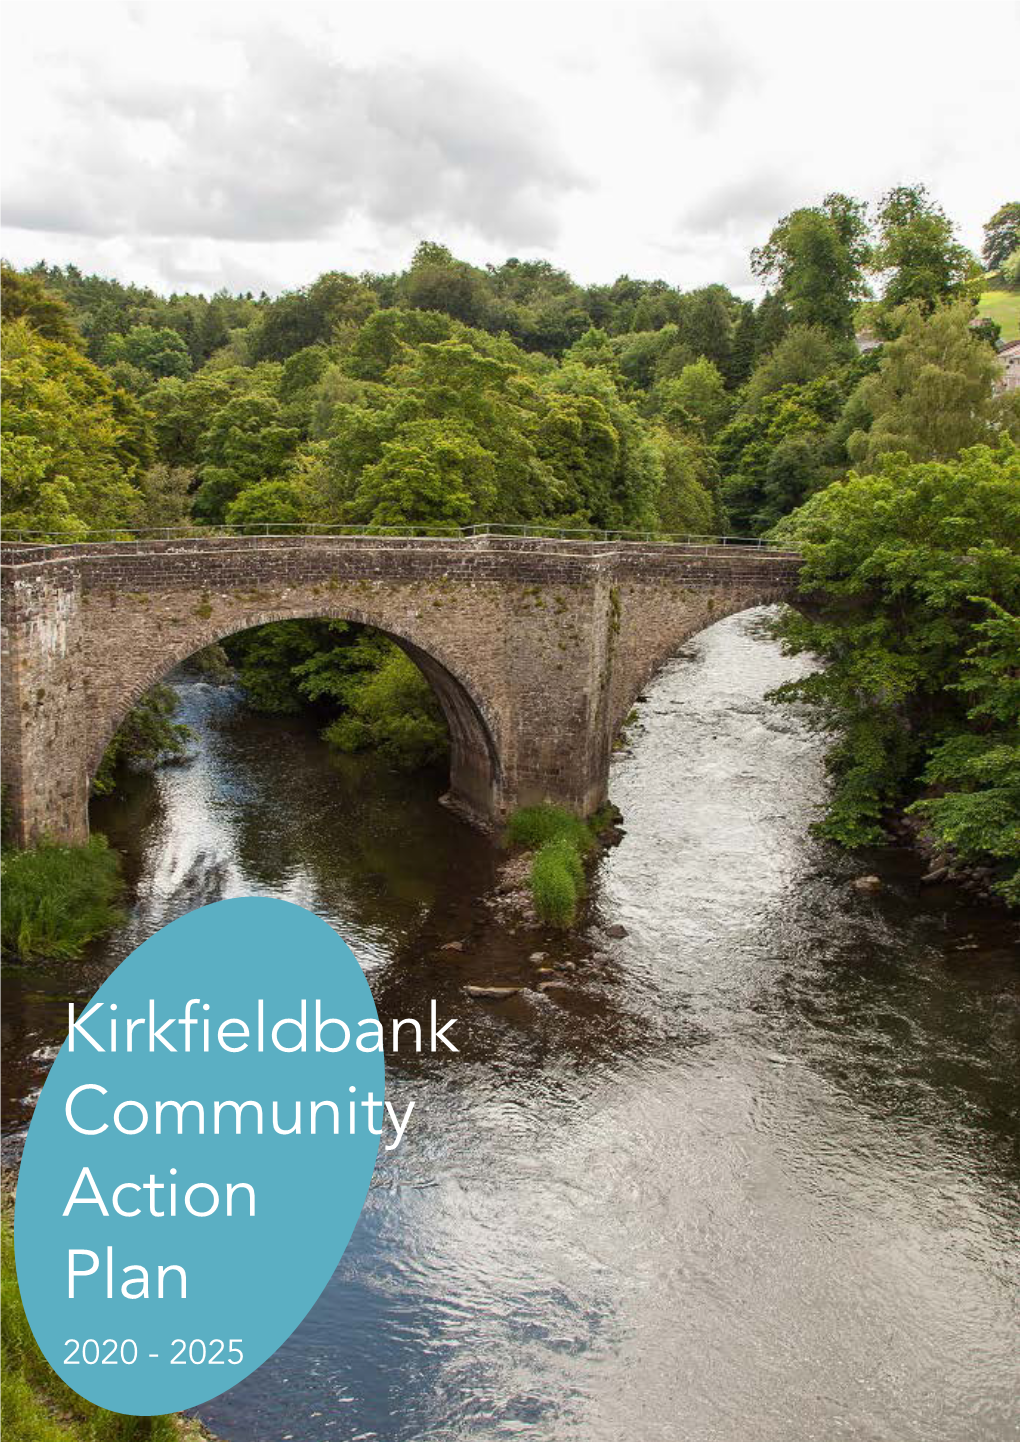 Kirkfieldbank Community Action Plan 2020 - 2025